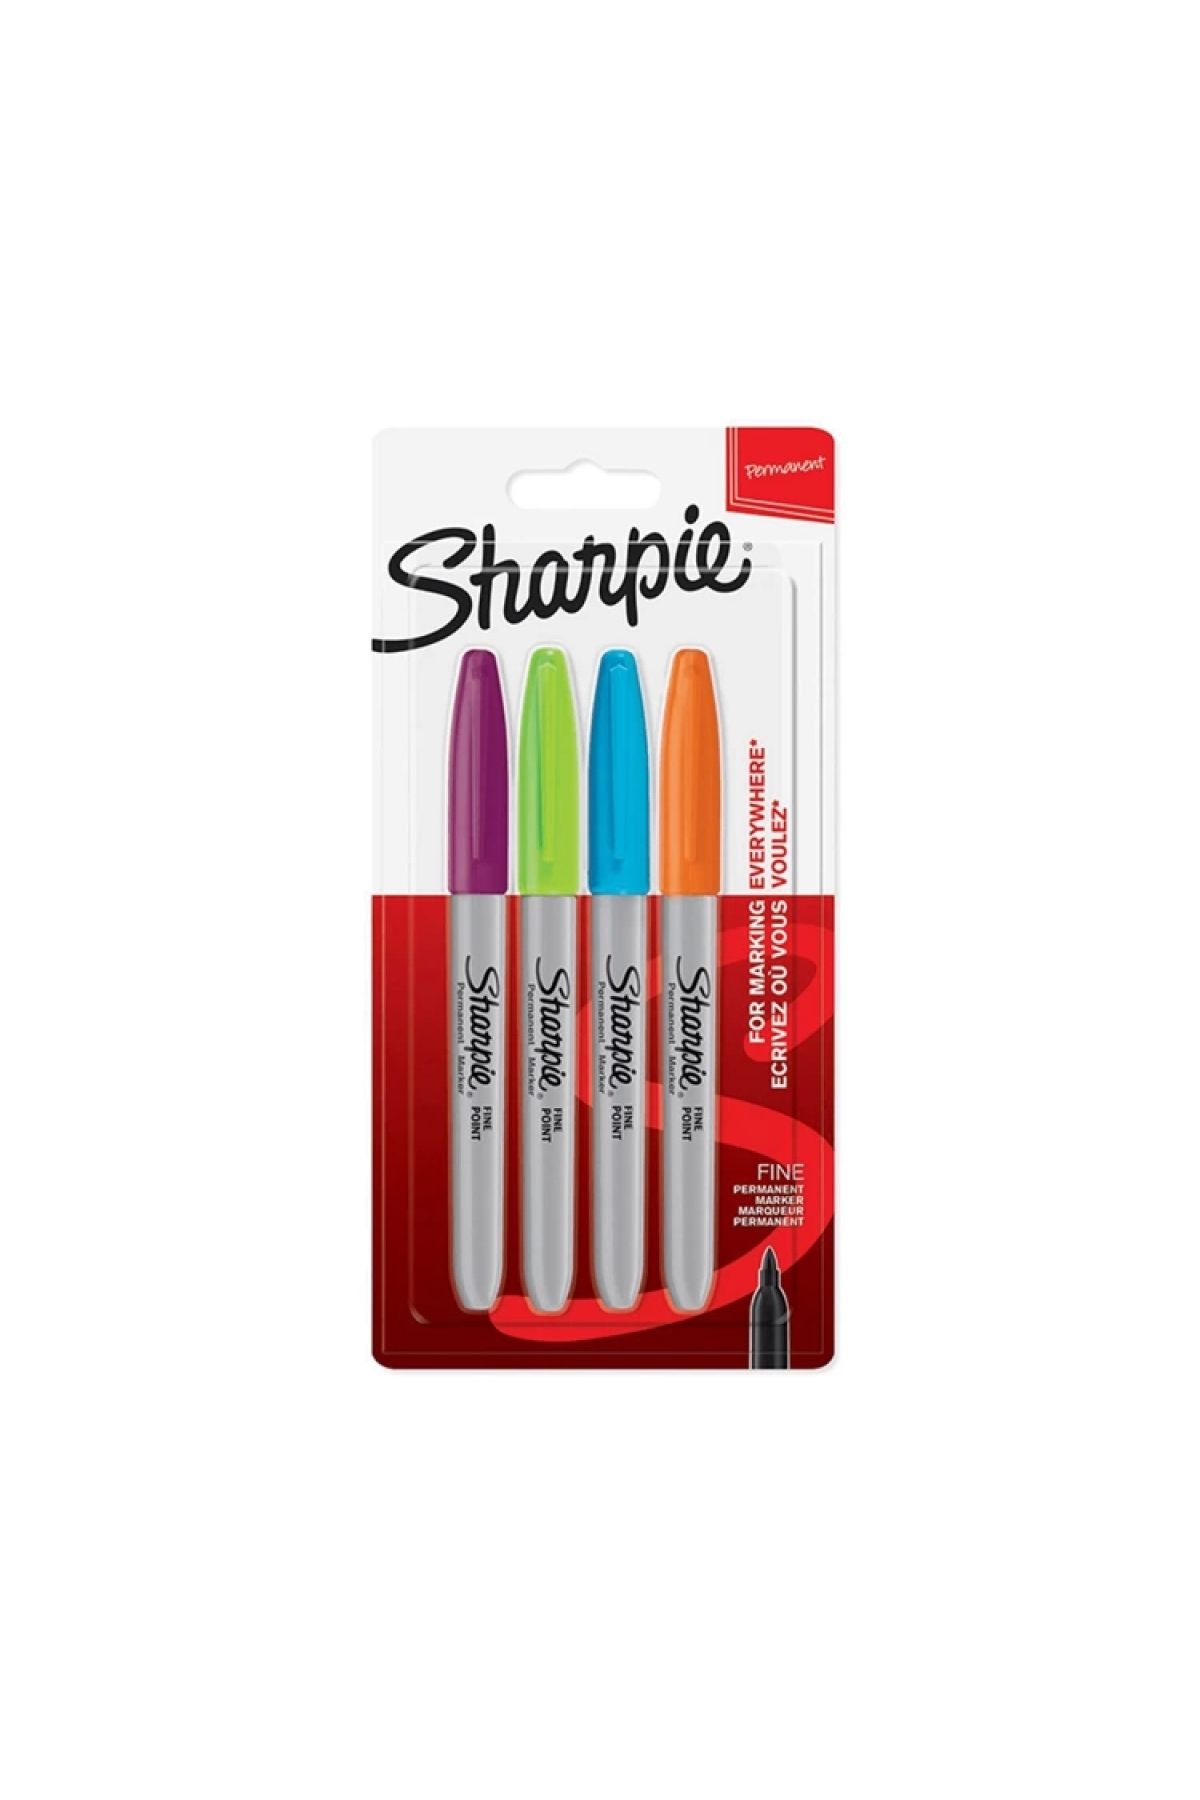 Sharpie Permanent Marker Canlı Renkler 4'lü Set 2065403